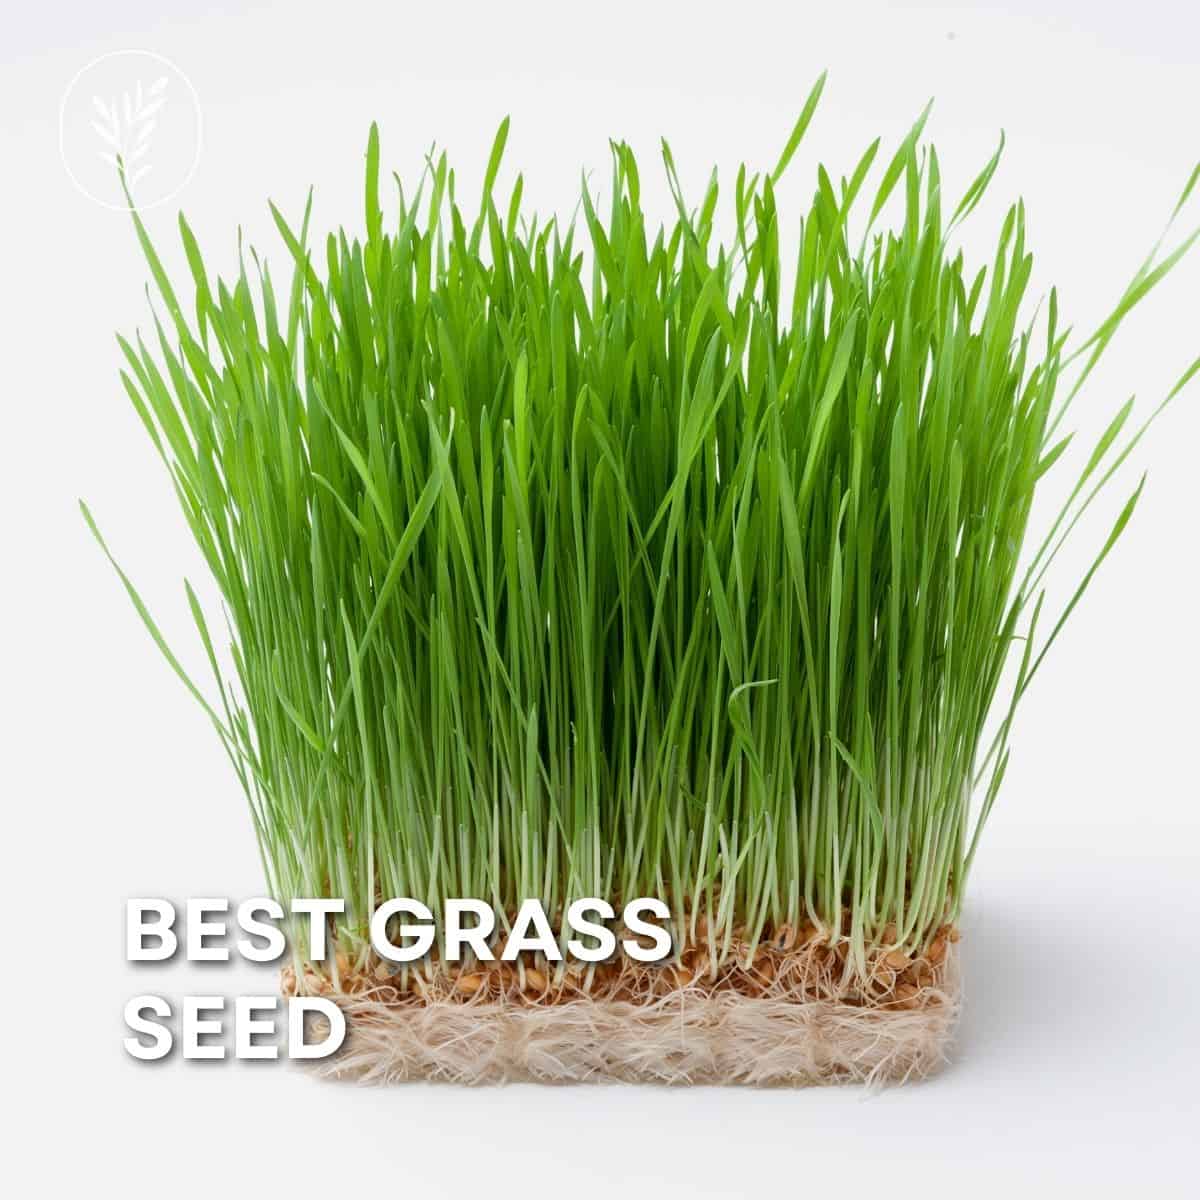 Best grass seed via @home4theharvest